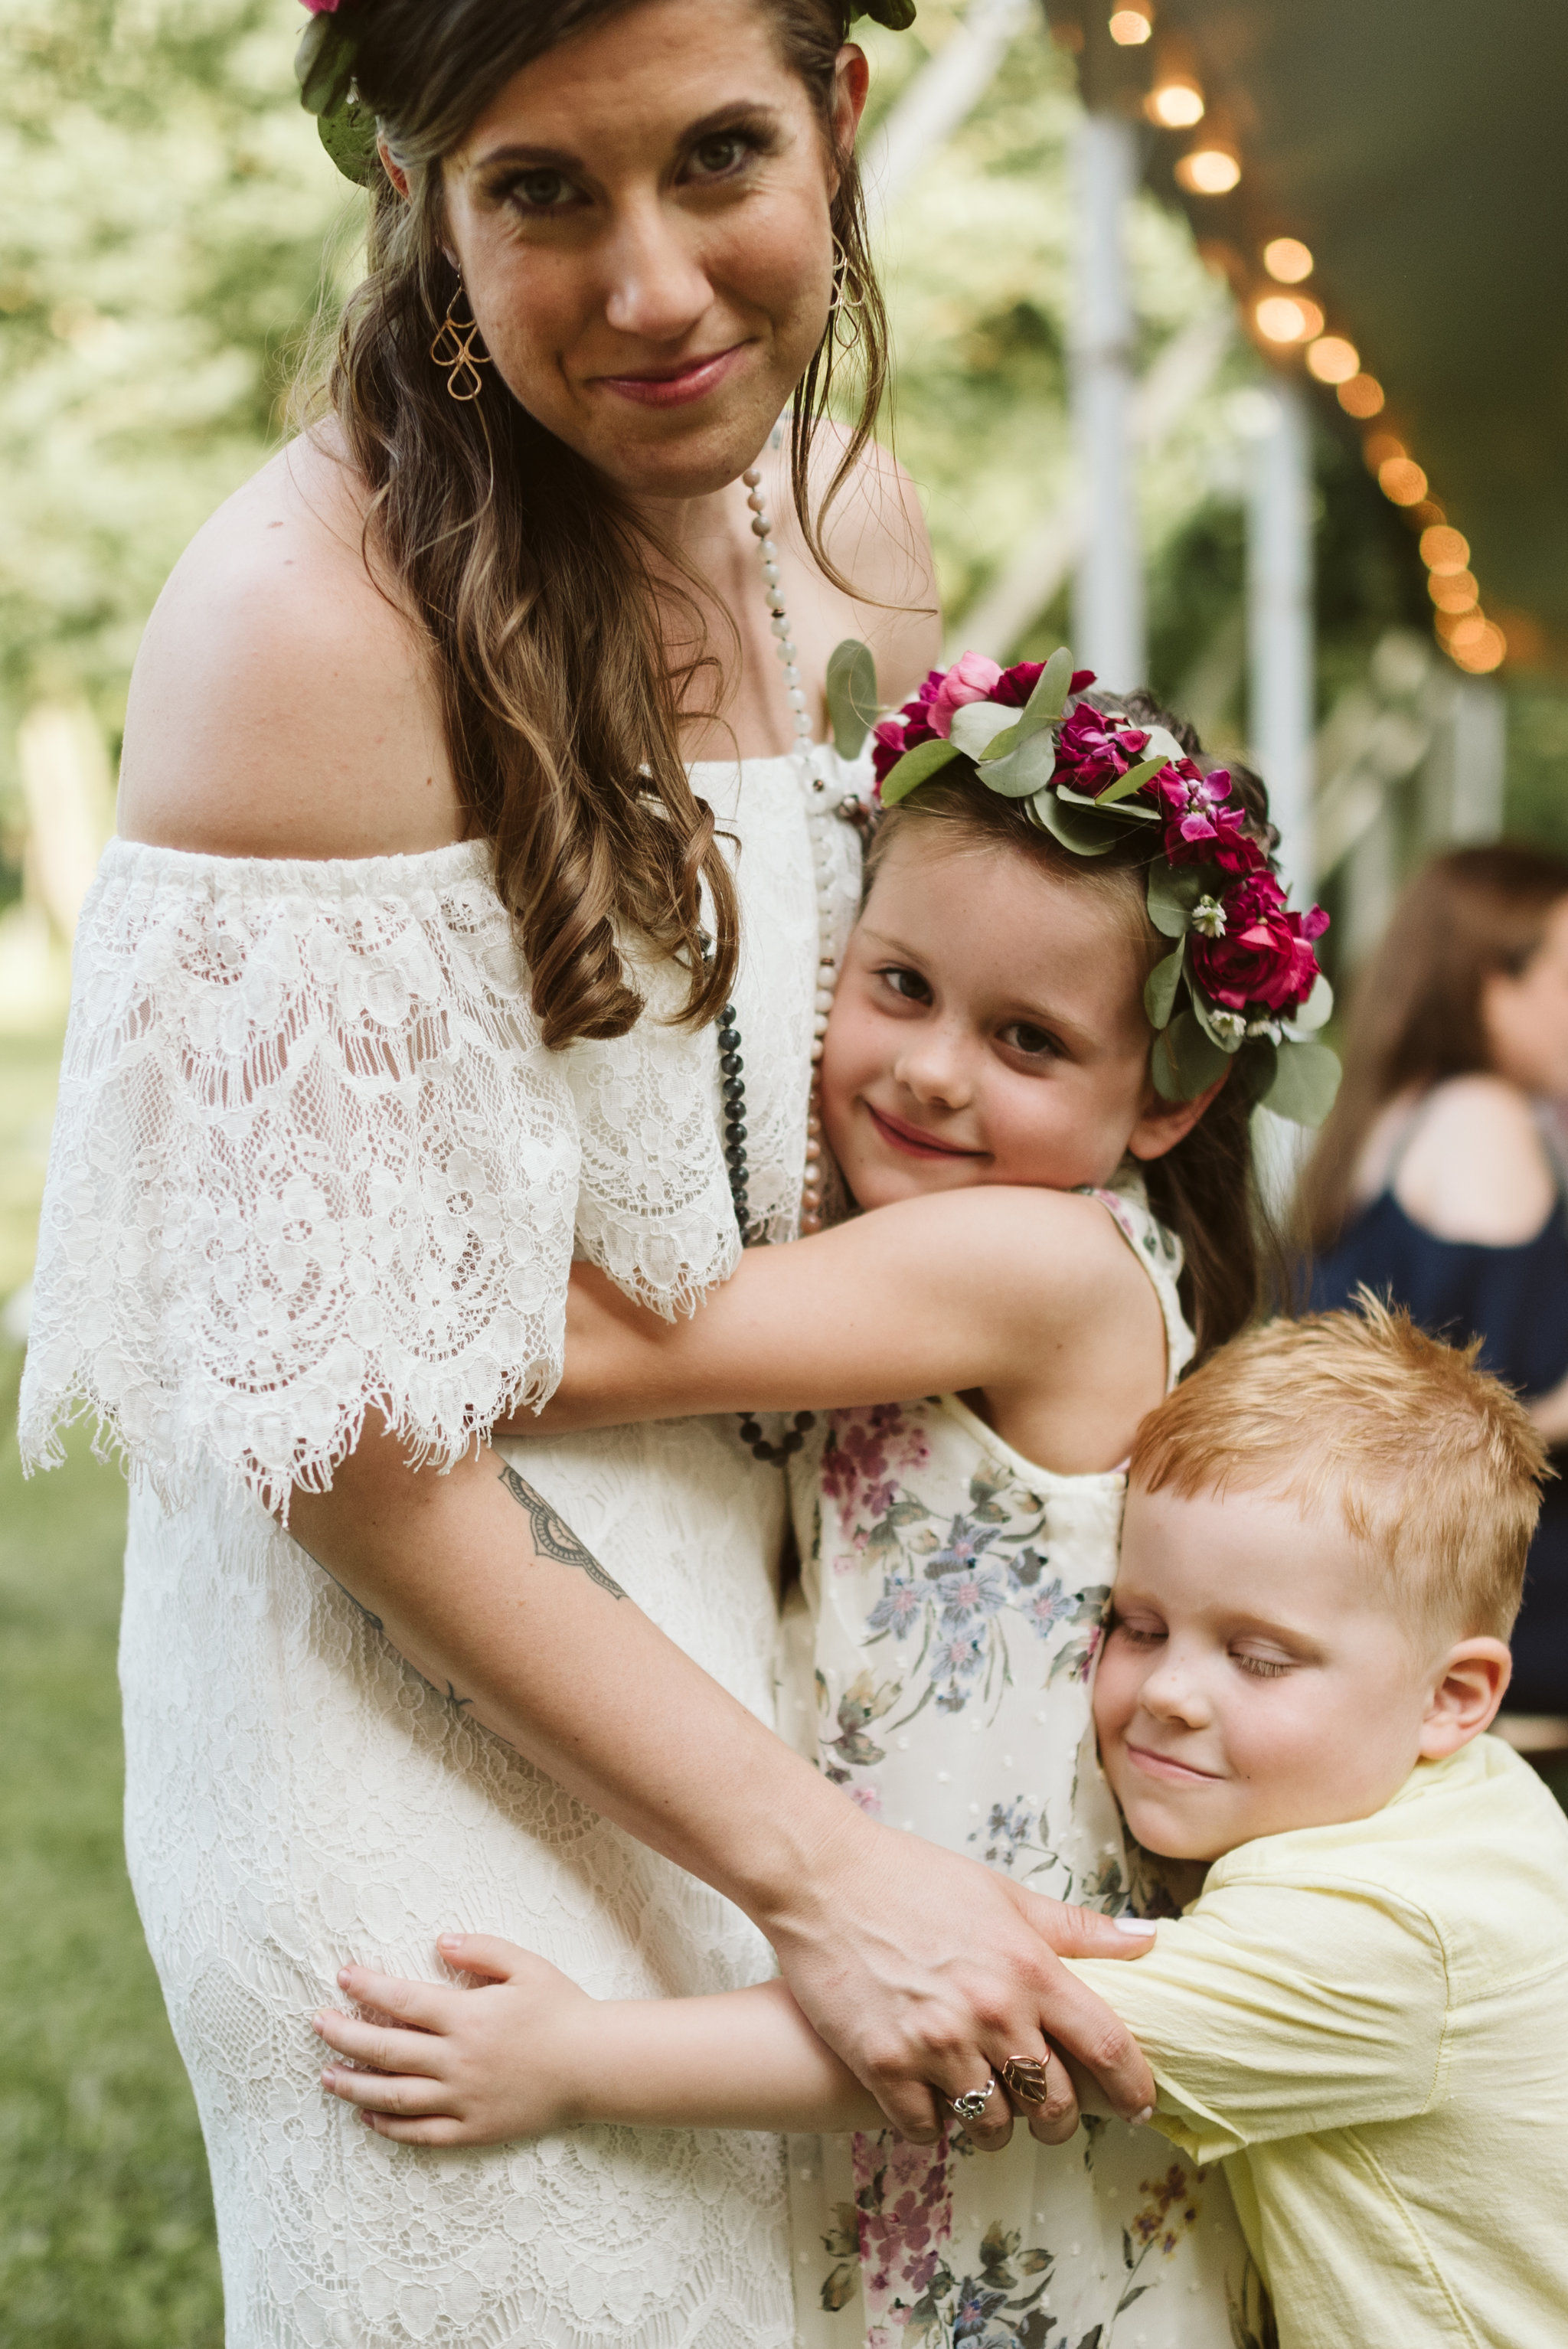  Annapolis, Quaker Wedding, Maryland Wedding Photographer, Intimate, Small Wedding, Vintage, DIY, Bride Hugging Kids at Reception, Sweet Photo of Bride with Children 